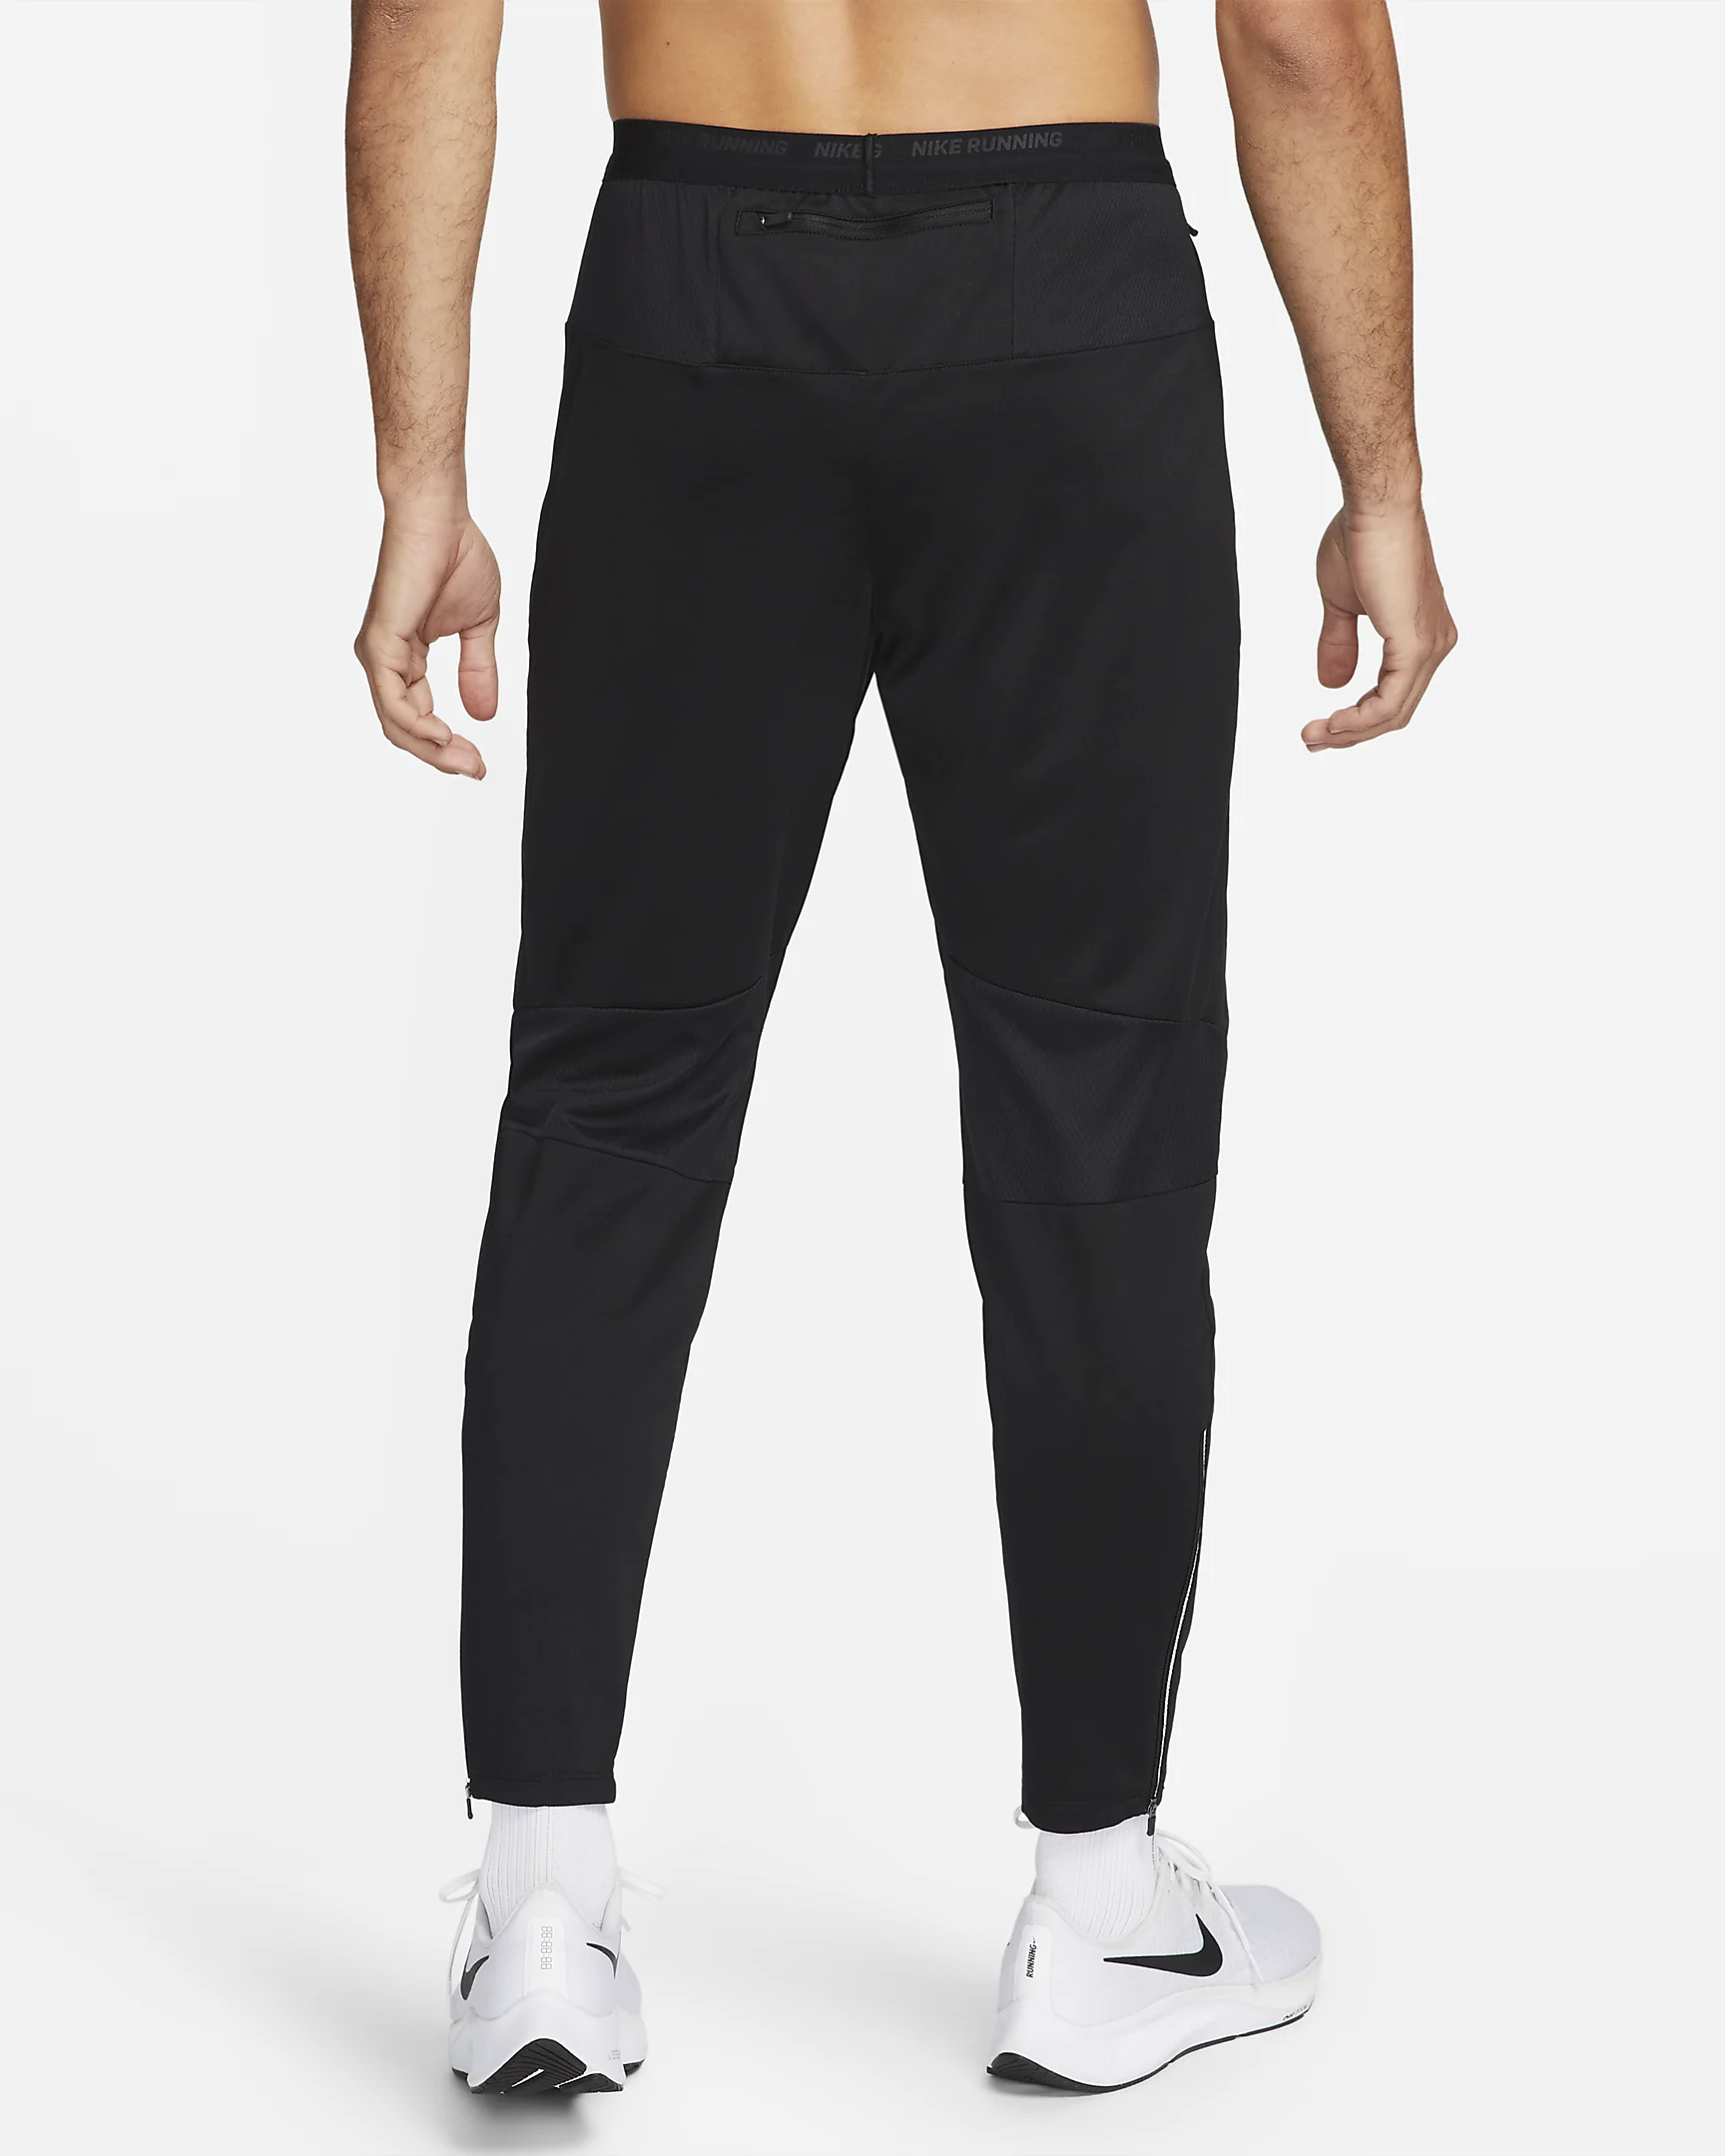 Nike Phenom Elite Knit Pants - Men's